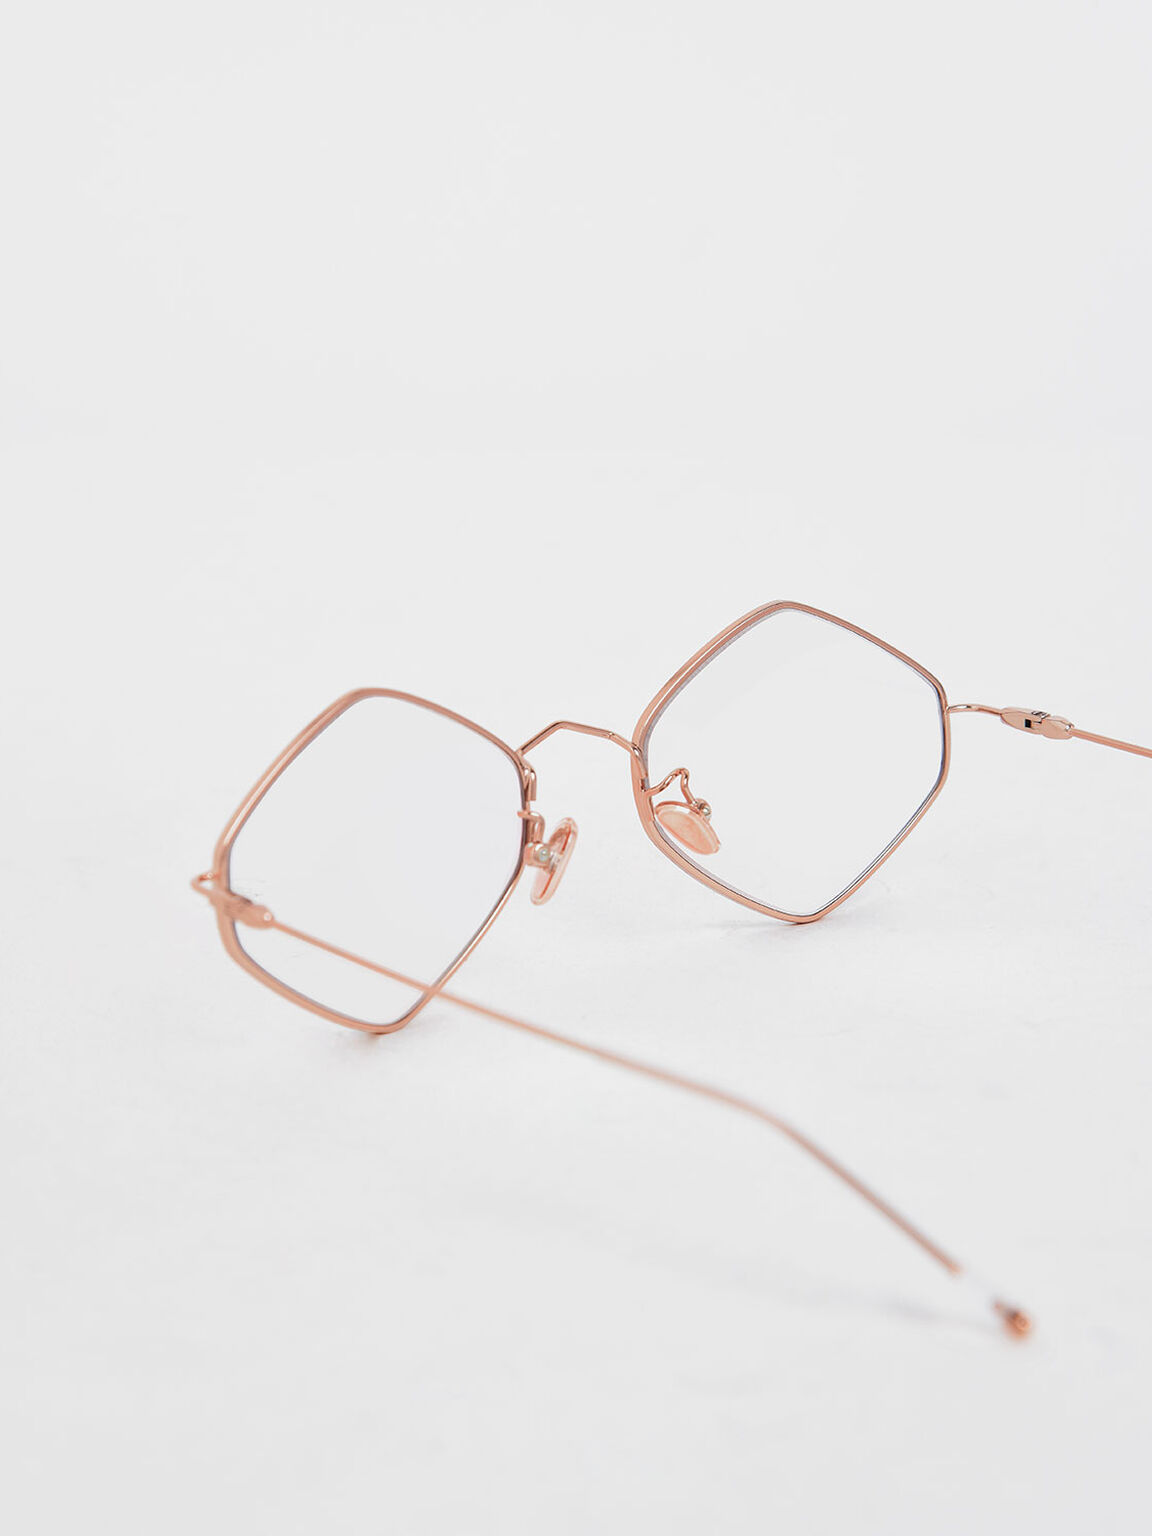 Thin Metal Frame Geometric Sunglasses, Pink, hi-res